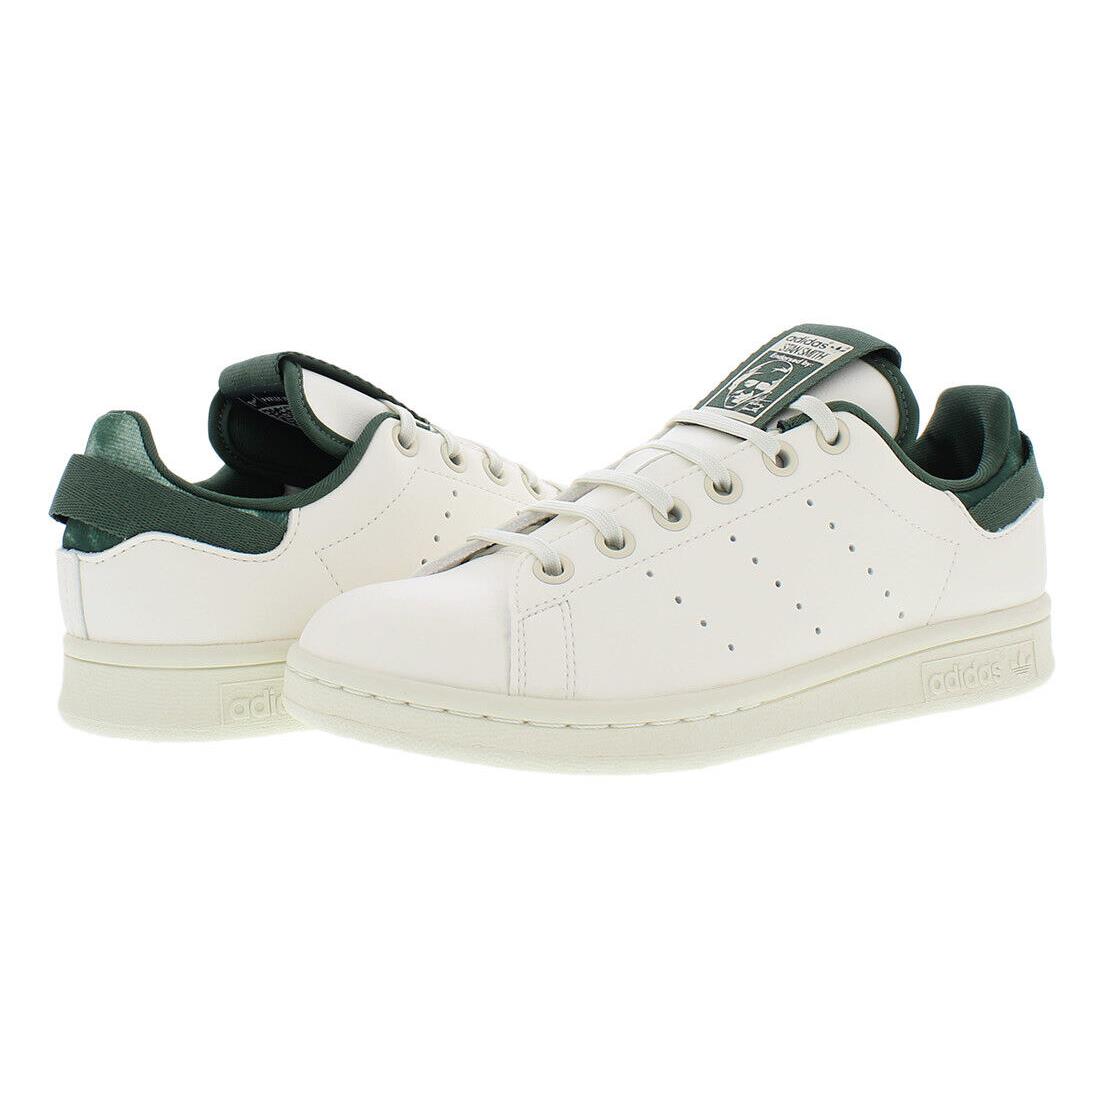 Adidas Stan Smith Boys Shoes - Cream/Green, Main: White